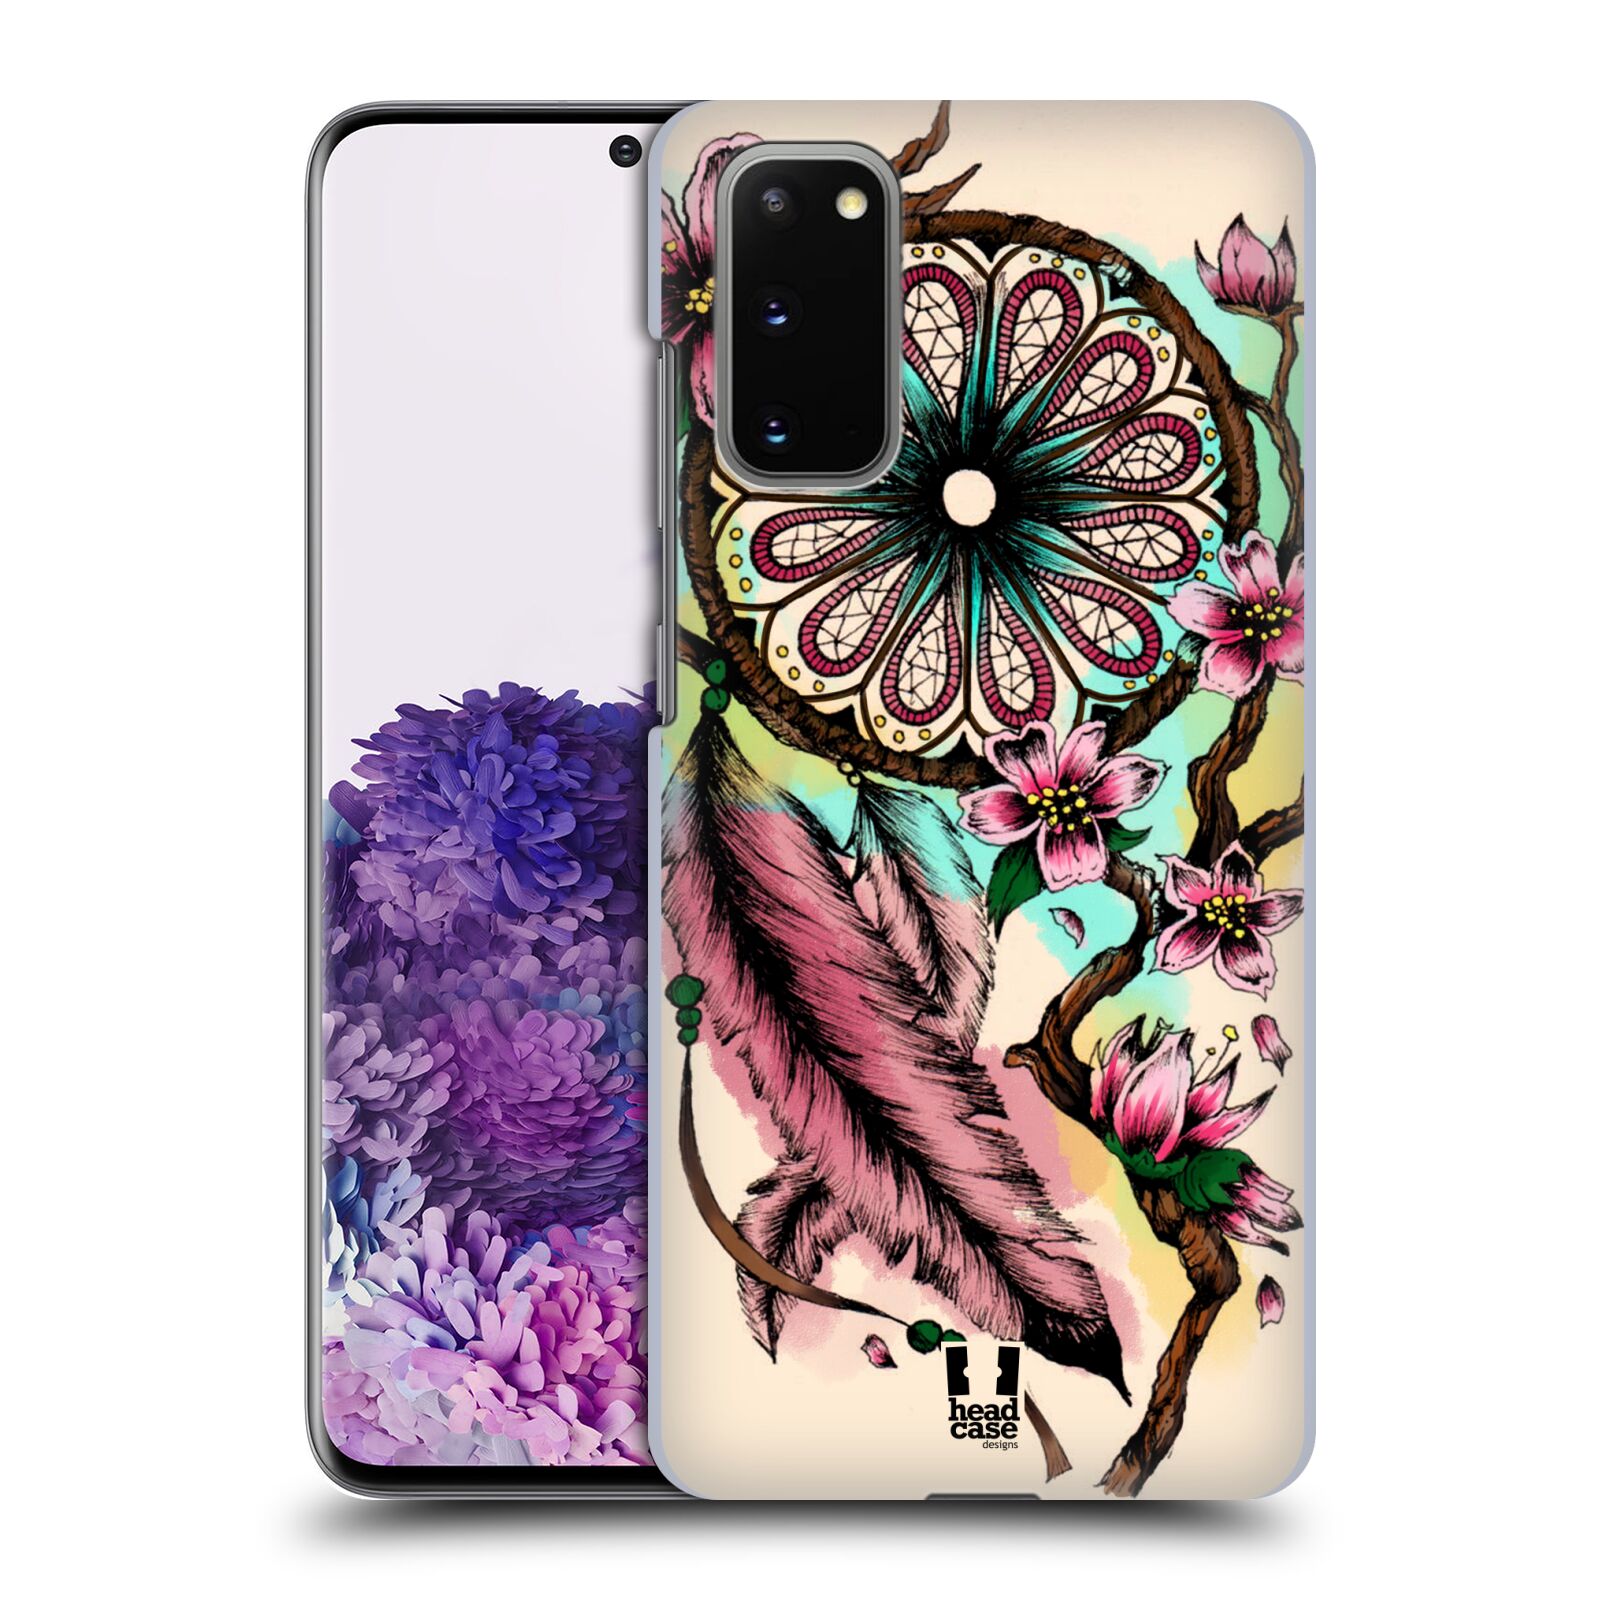 Pouzdro na mobil Samsung Galaxy S20 - HEAD CASE - vzor Květy lapač snů růžová